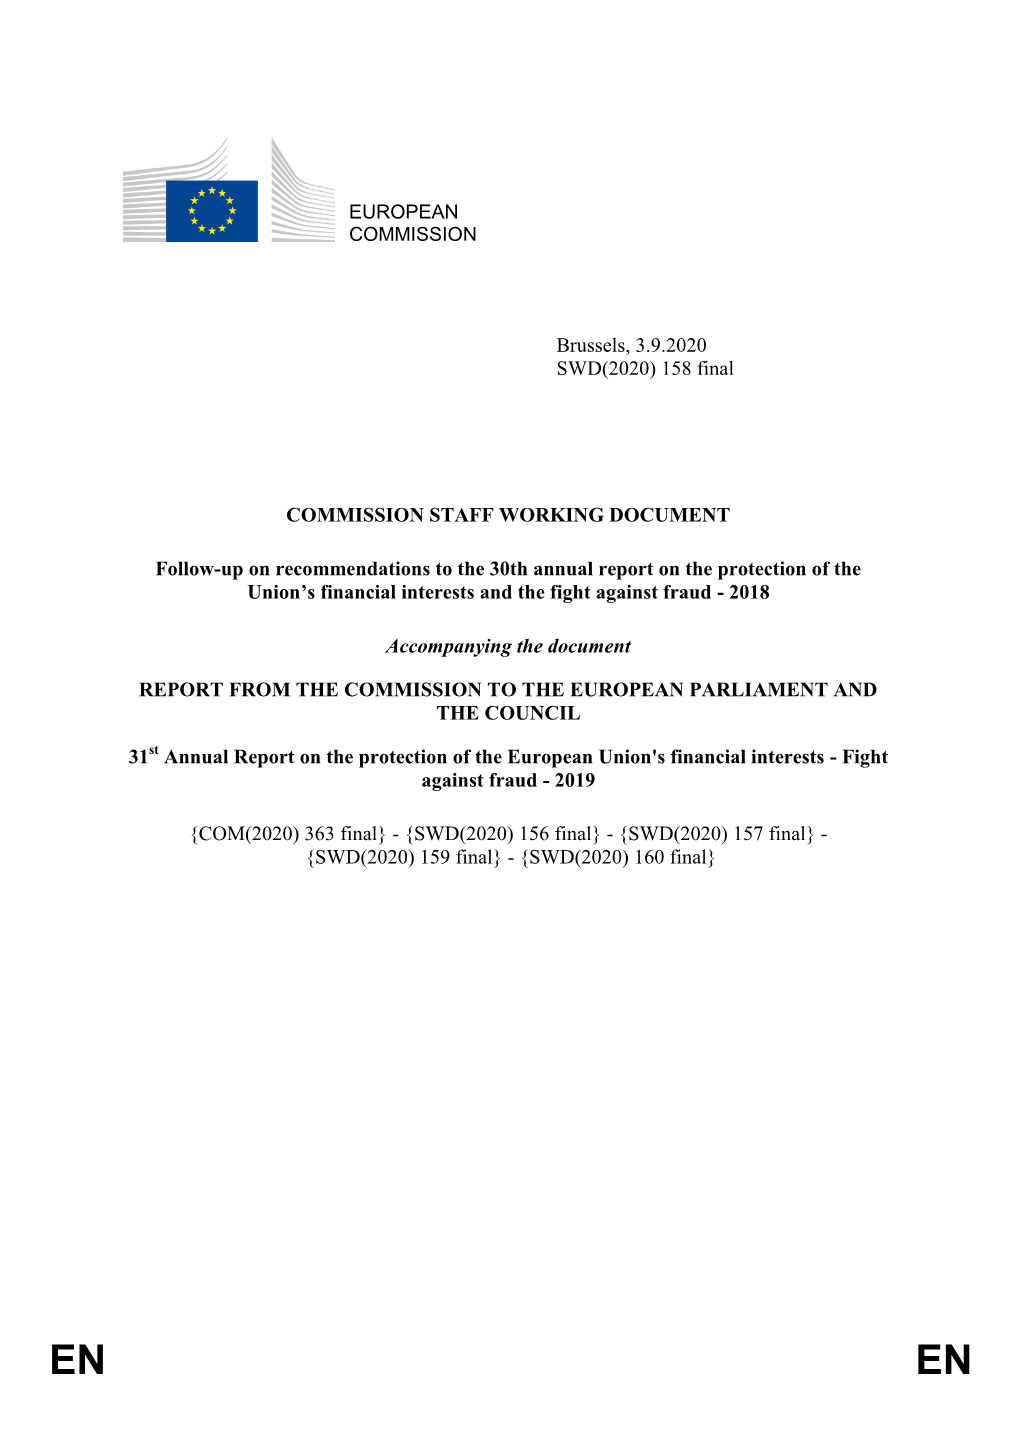 EUROPEAN COMMISSION Brussels, 3.9.2020 SWD(2020) 158 Final